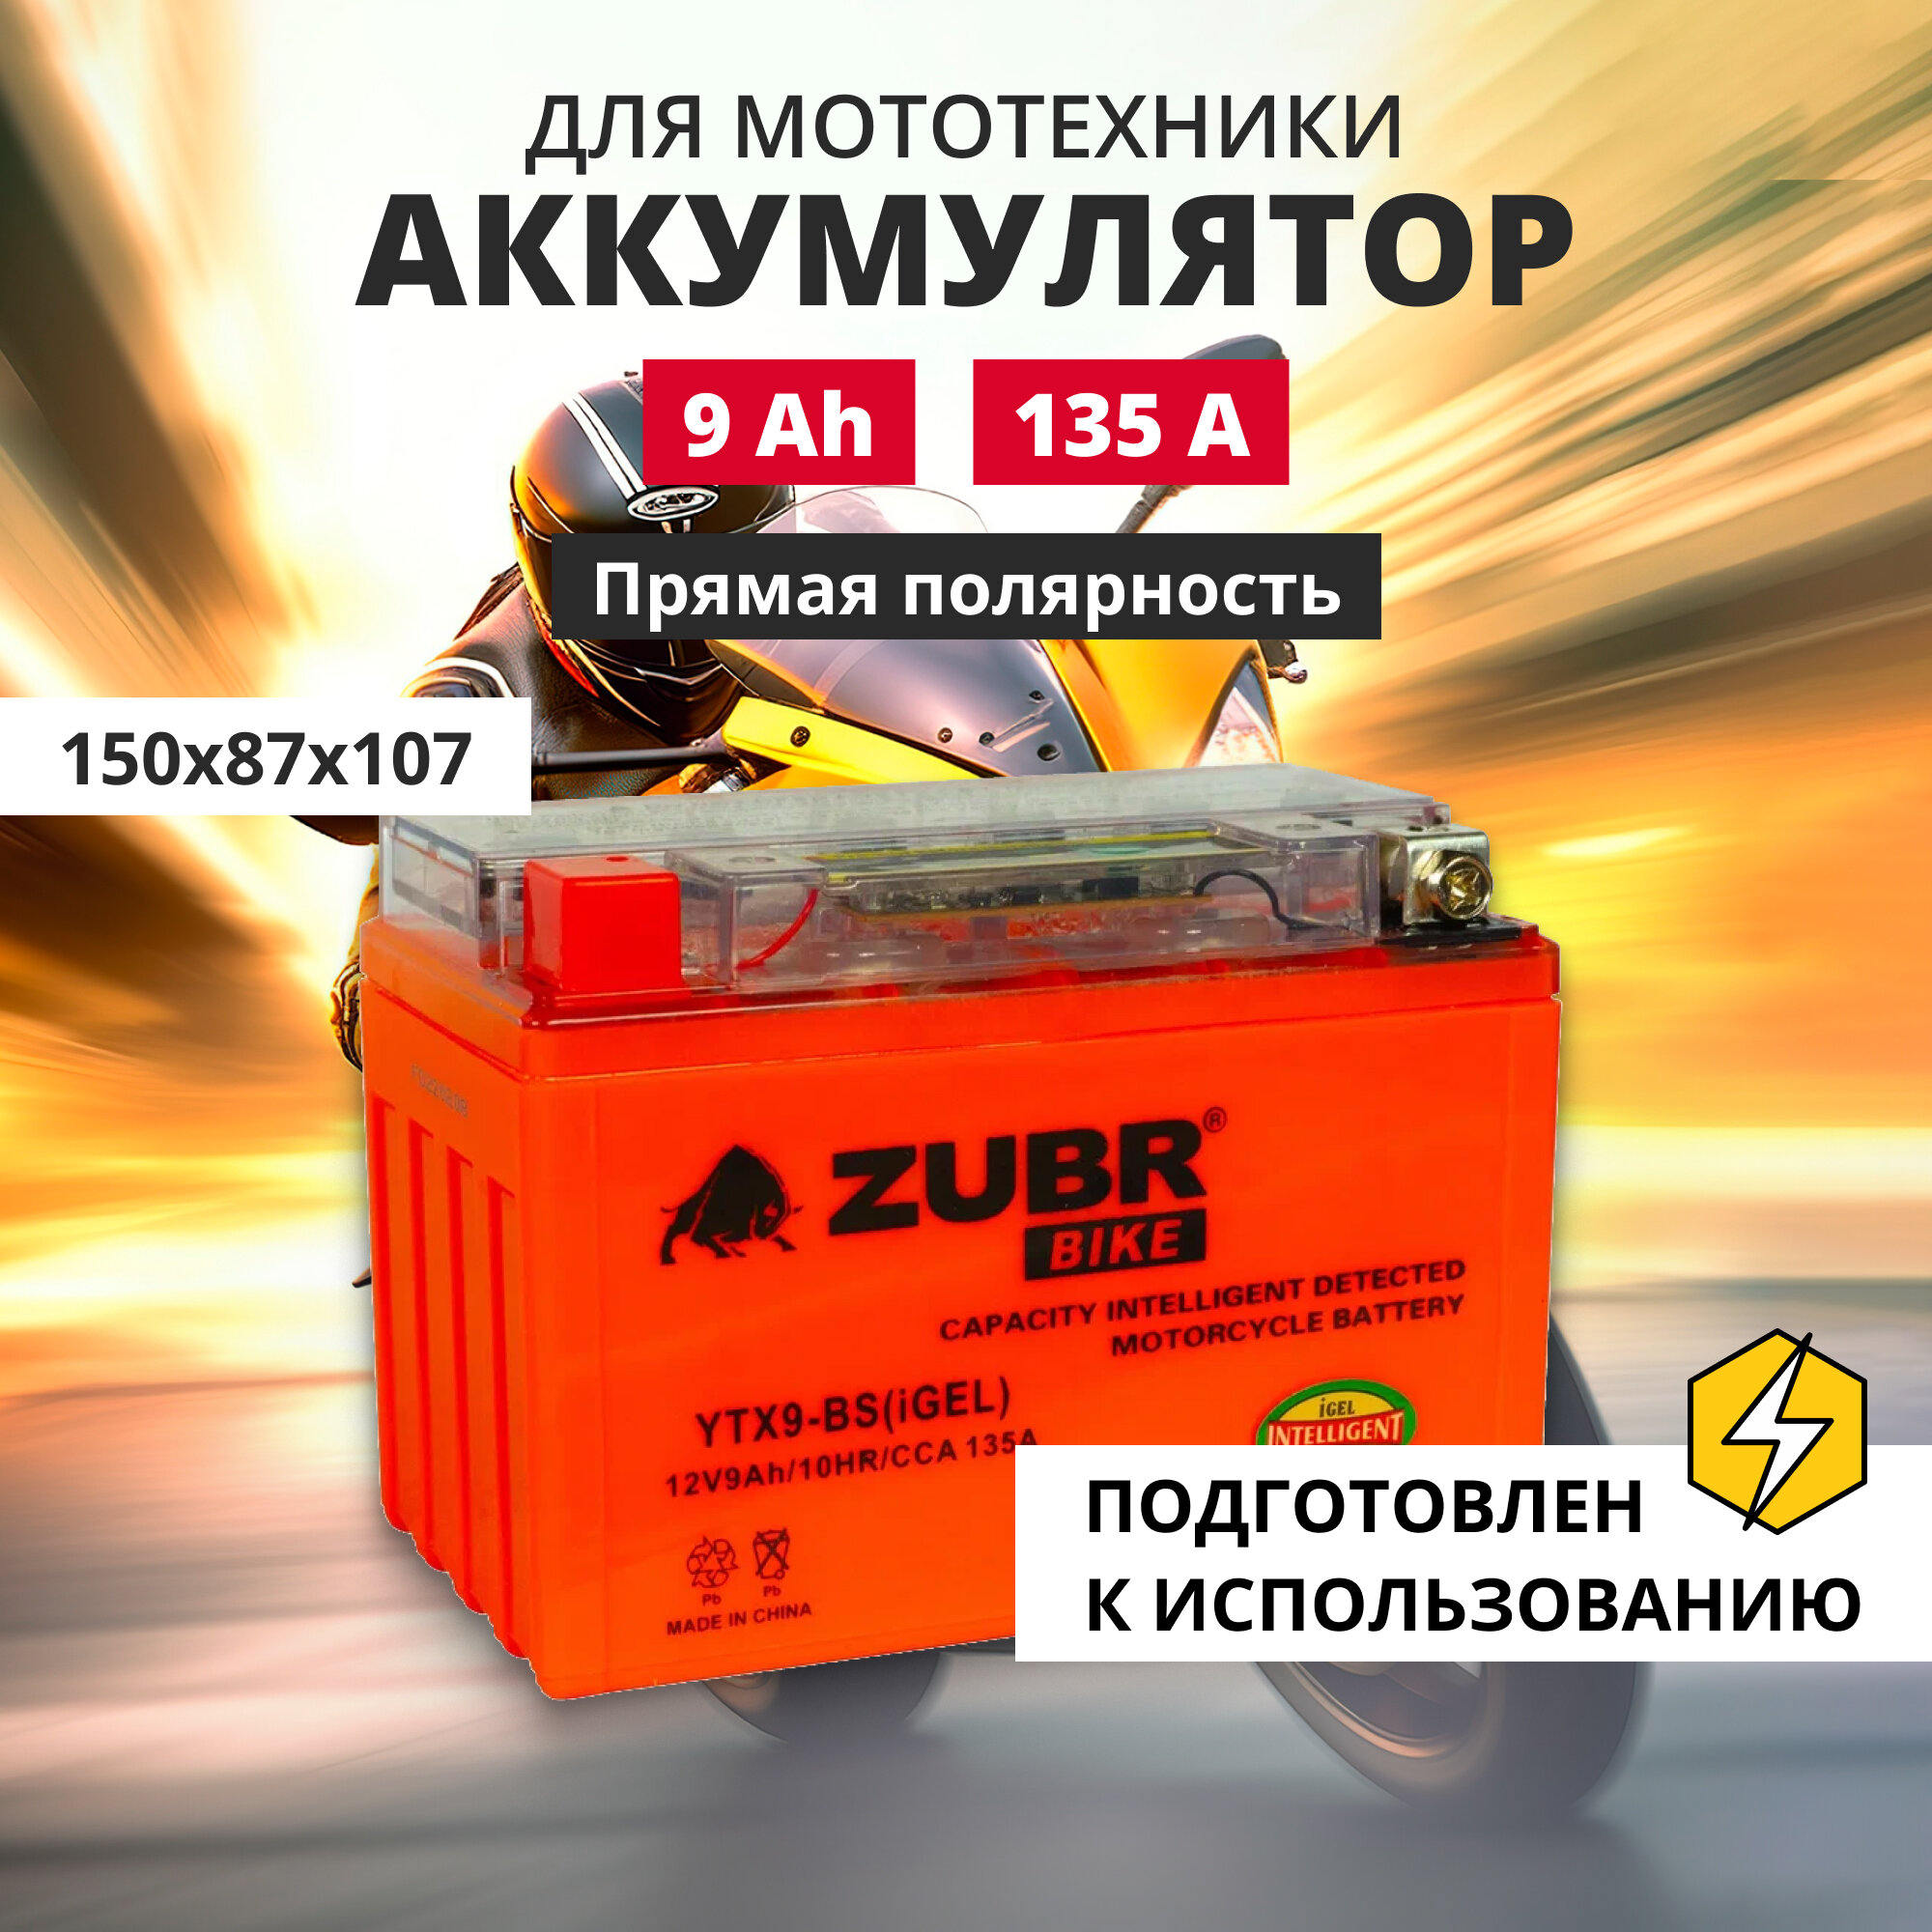 Аккумулятор для мотоцикла 12v ZUBR YTX9-BS(iGEL) прямая полярность 9 Ah 135 A гелевый, акб на скутер, мопед, квадроцикл 150x87x107 мм